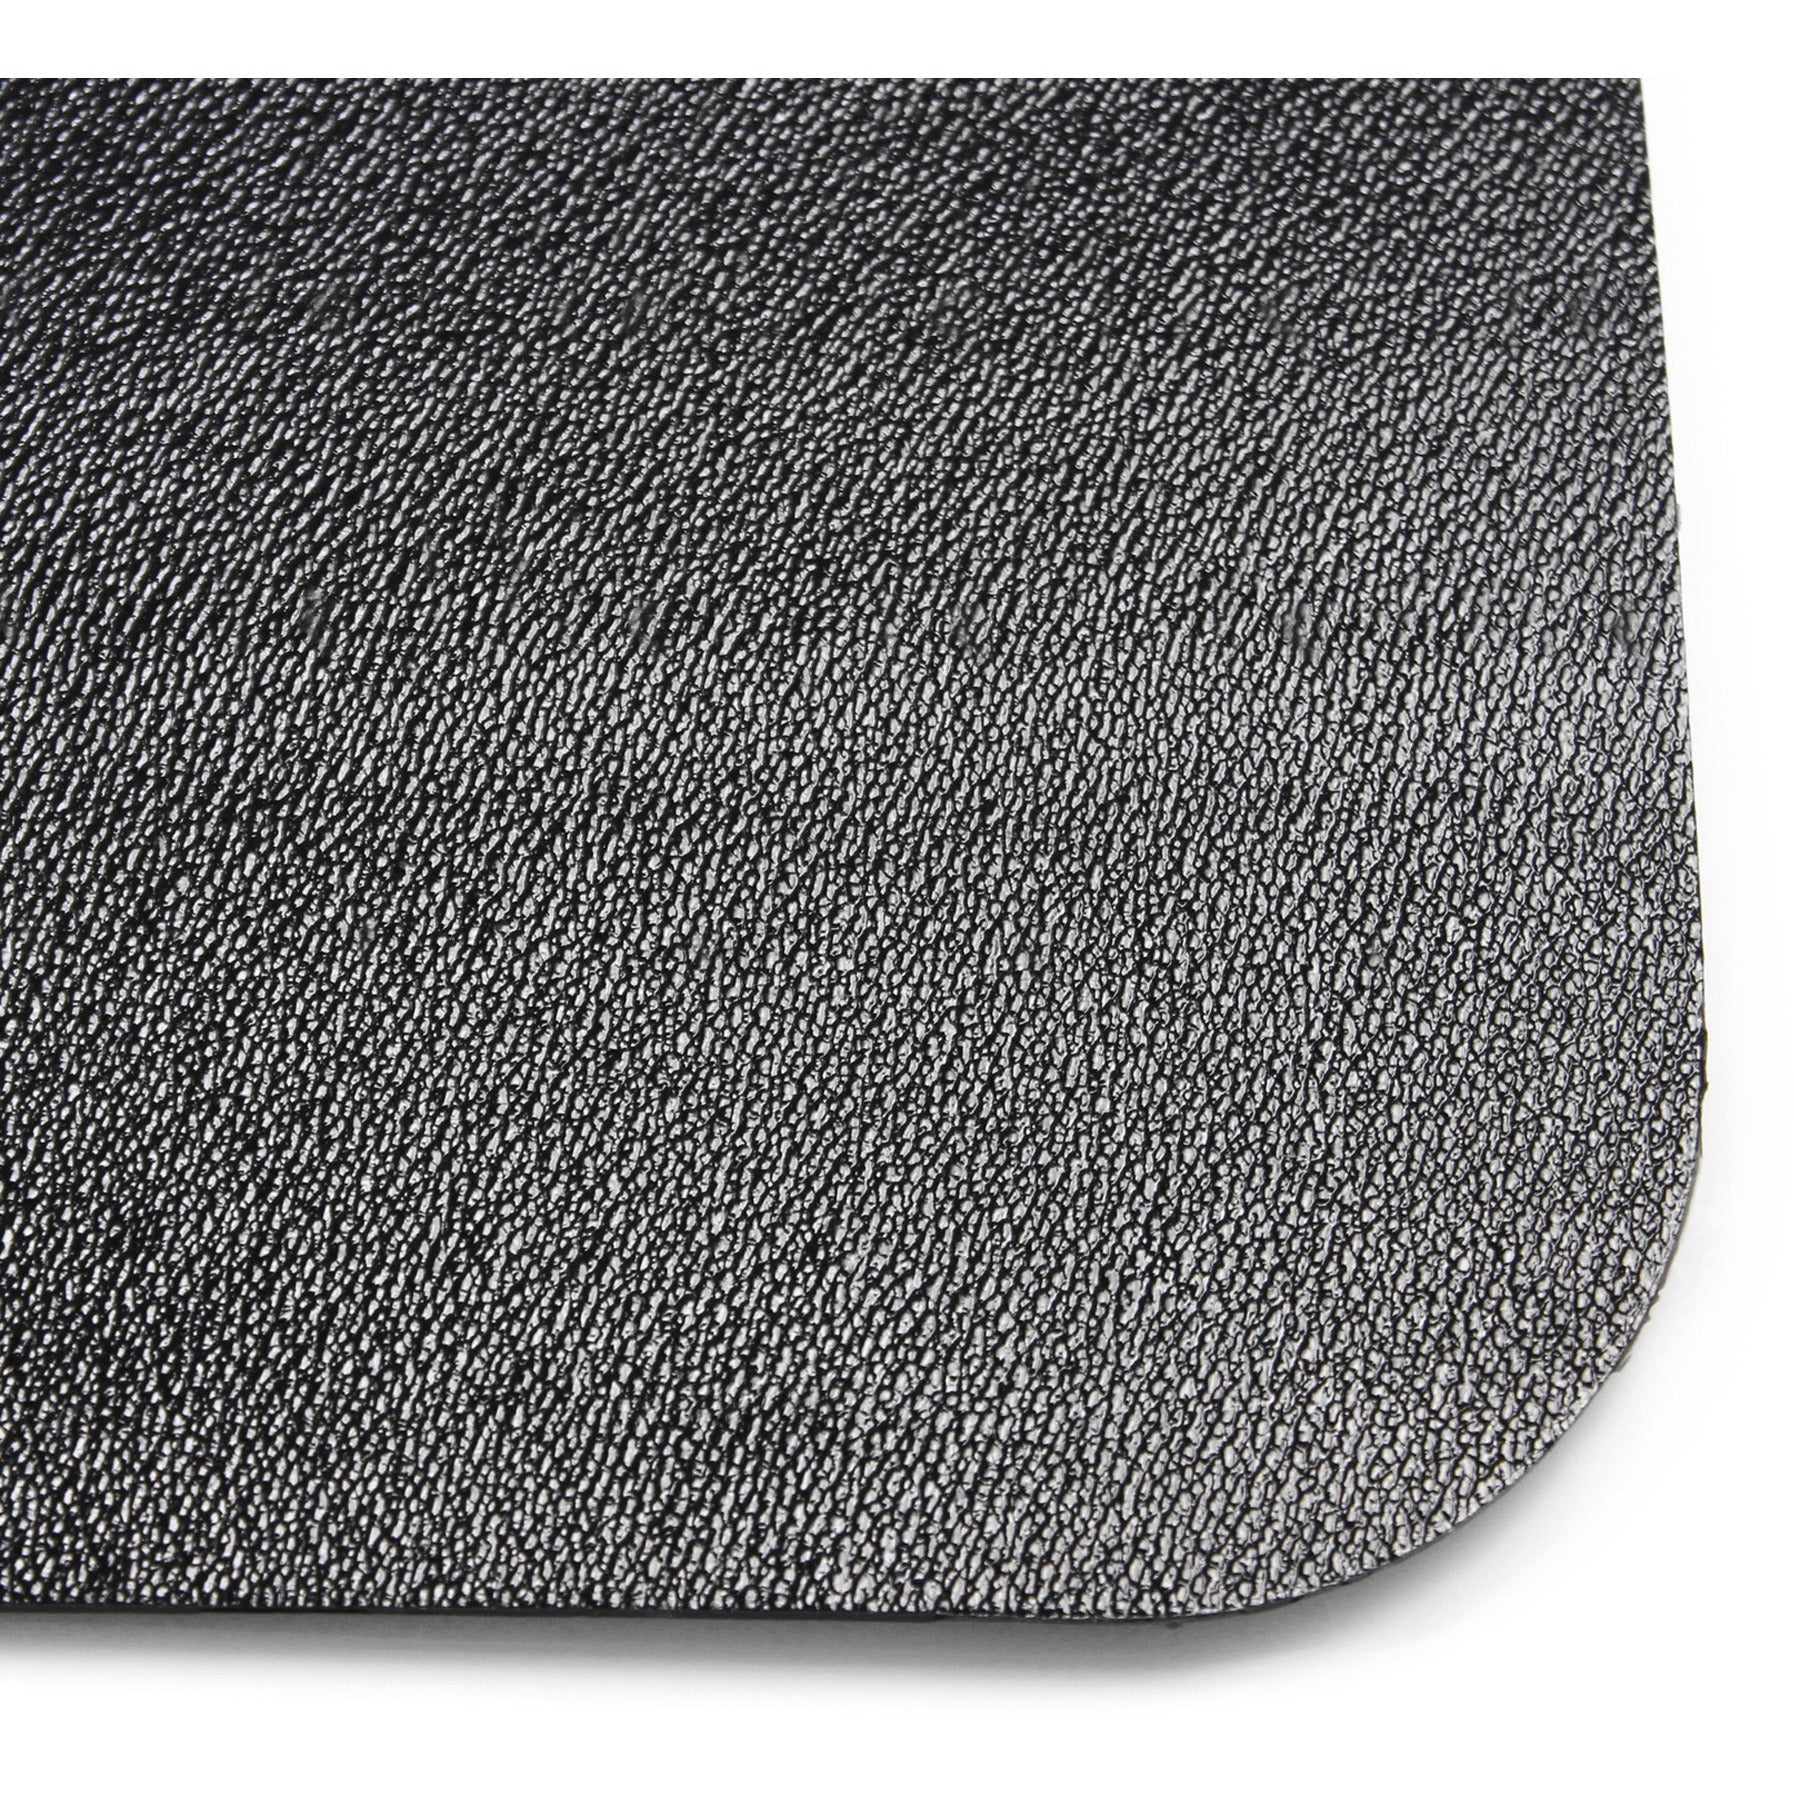 advantagemat-black-vinyl-rectangular-chair-mat-for-hard-floor-48-x-60-hard-floor-60-length-x-48-width-x-0080-depth-x-0080-thickness-rectangular-classic-polyvinyl-chloride-pvc-black-1each-taa-compliant_flrfc124860hebv - 2